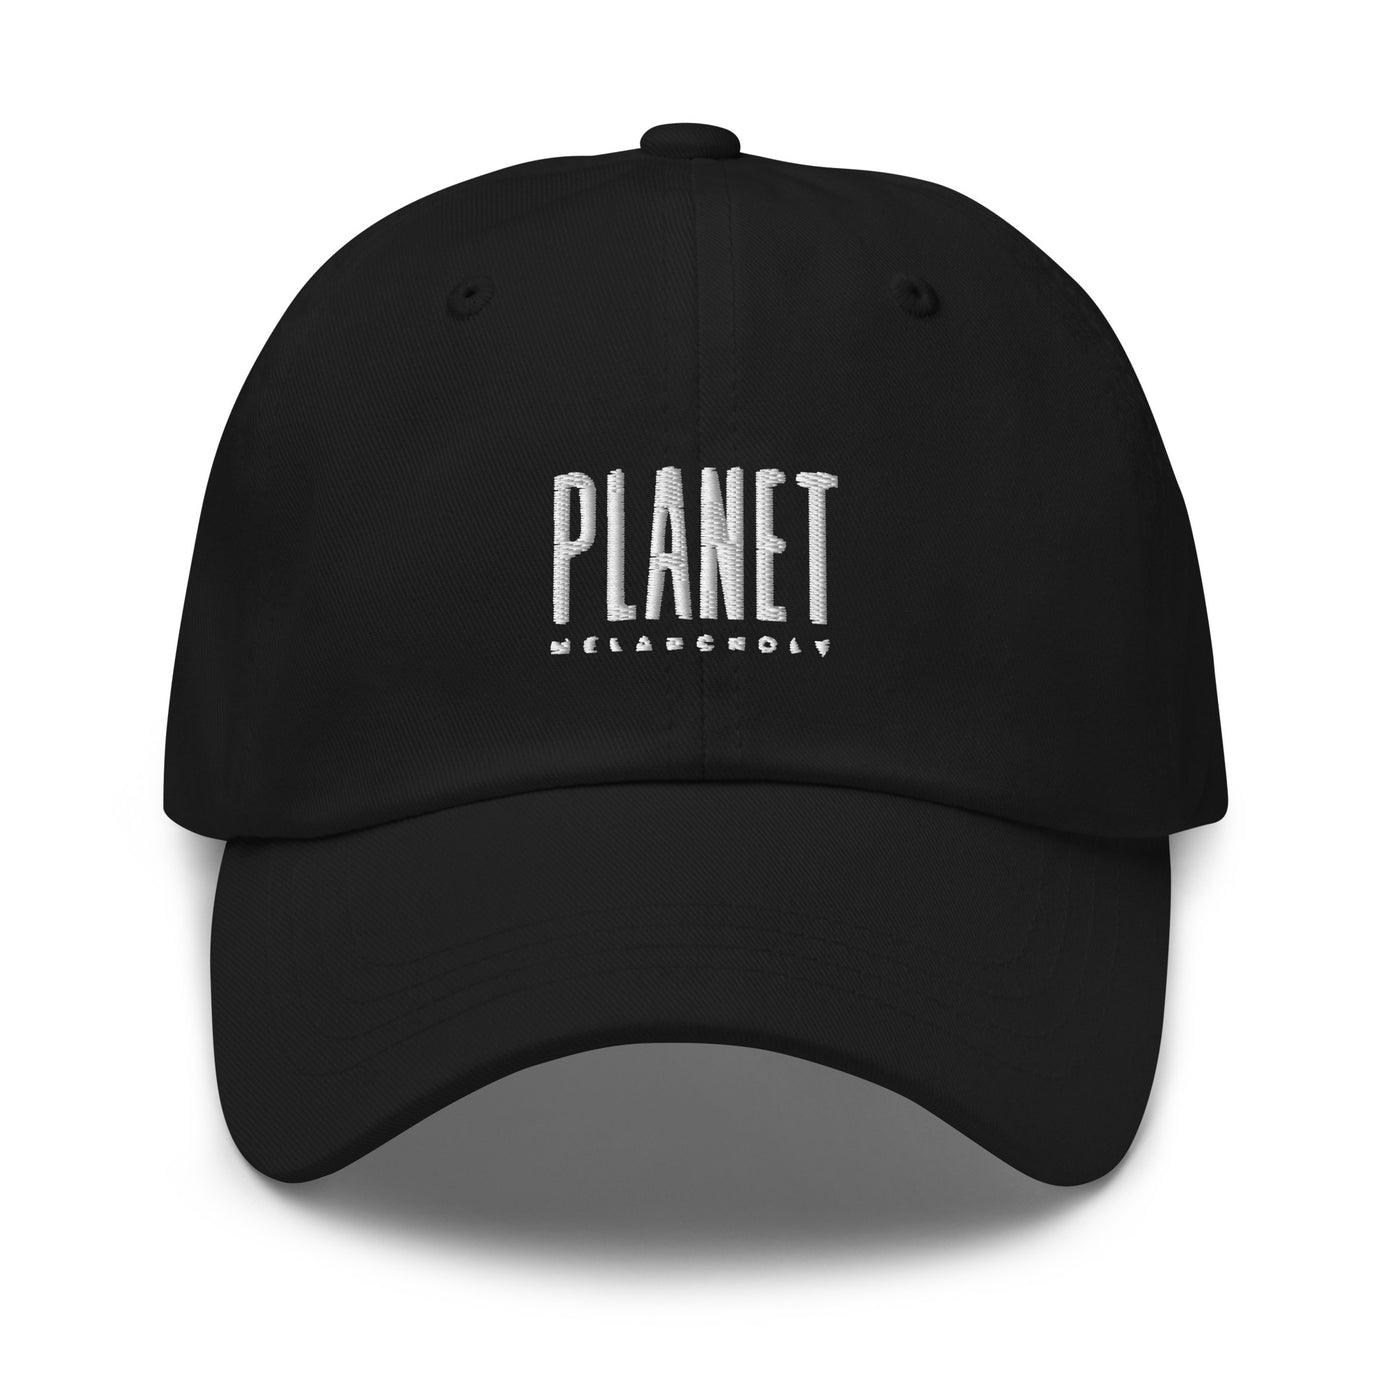 "Planet Melancholy's" Dad hat